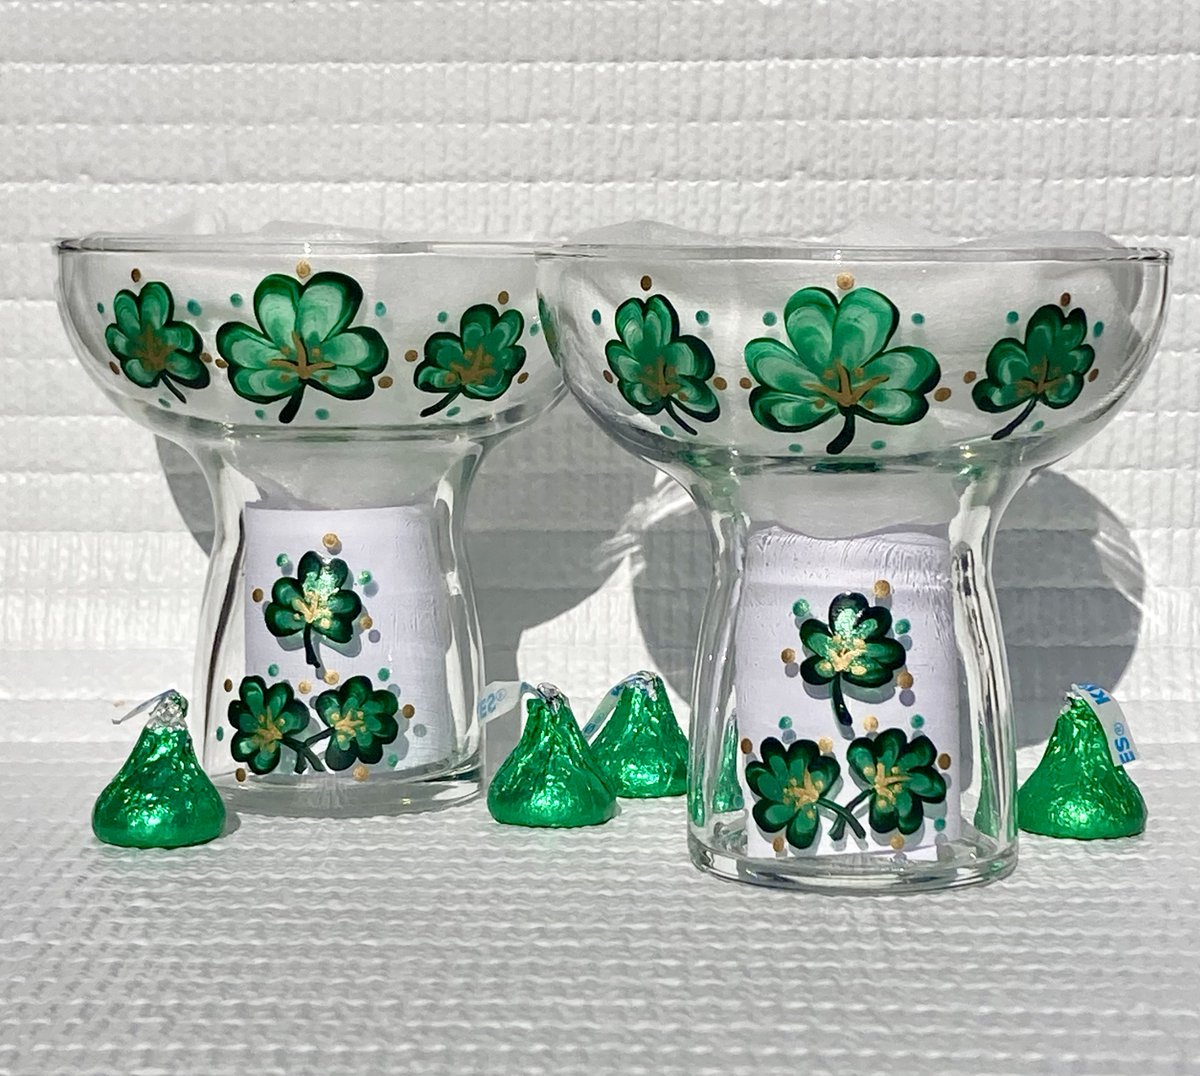 Great gift for an Irish girl etsy.com/listing/165360… #shamrocks #margaritaglasses #irishgifts #SMILEtt23 #CraftBizParty #cocktailglasses #etsyshop